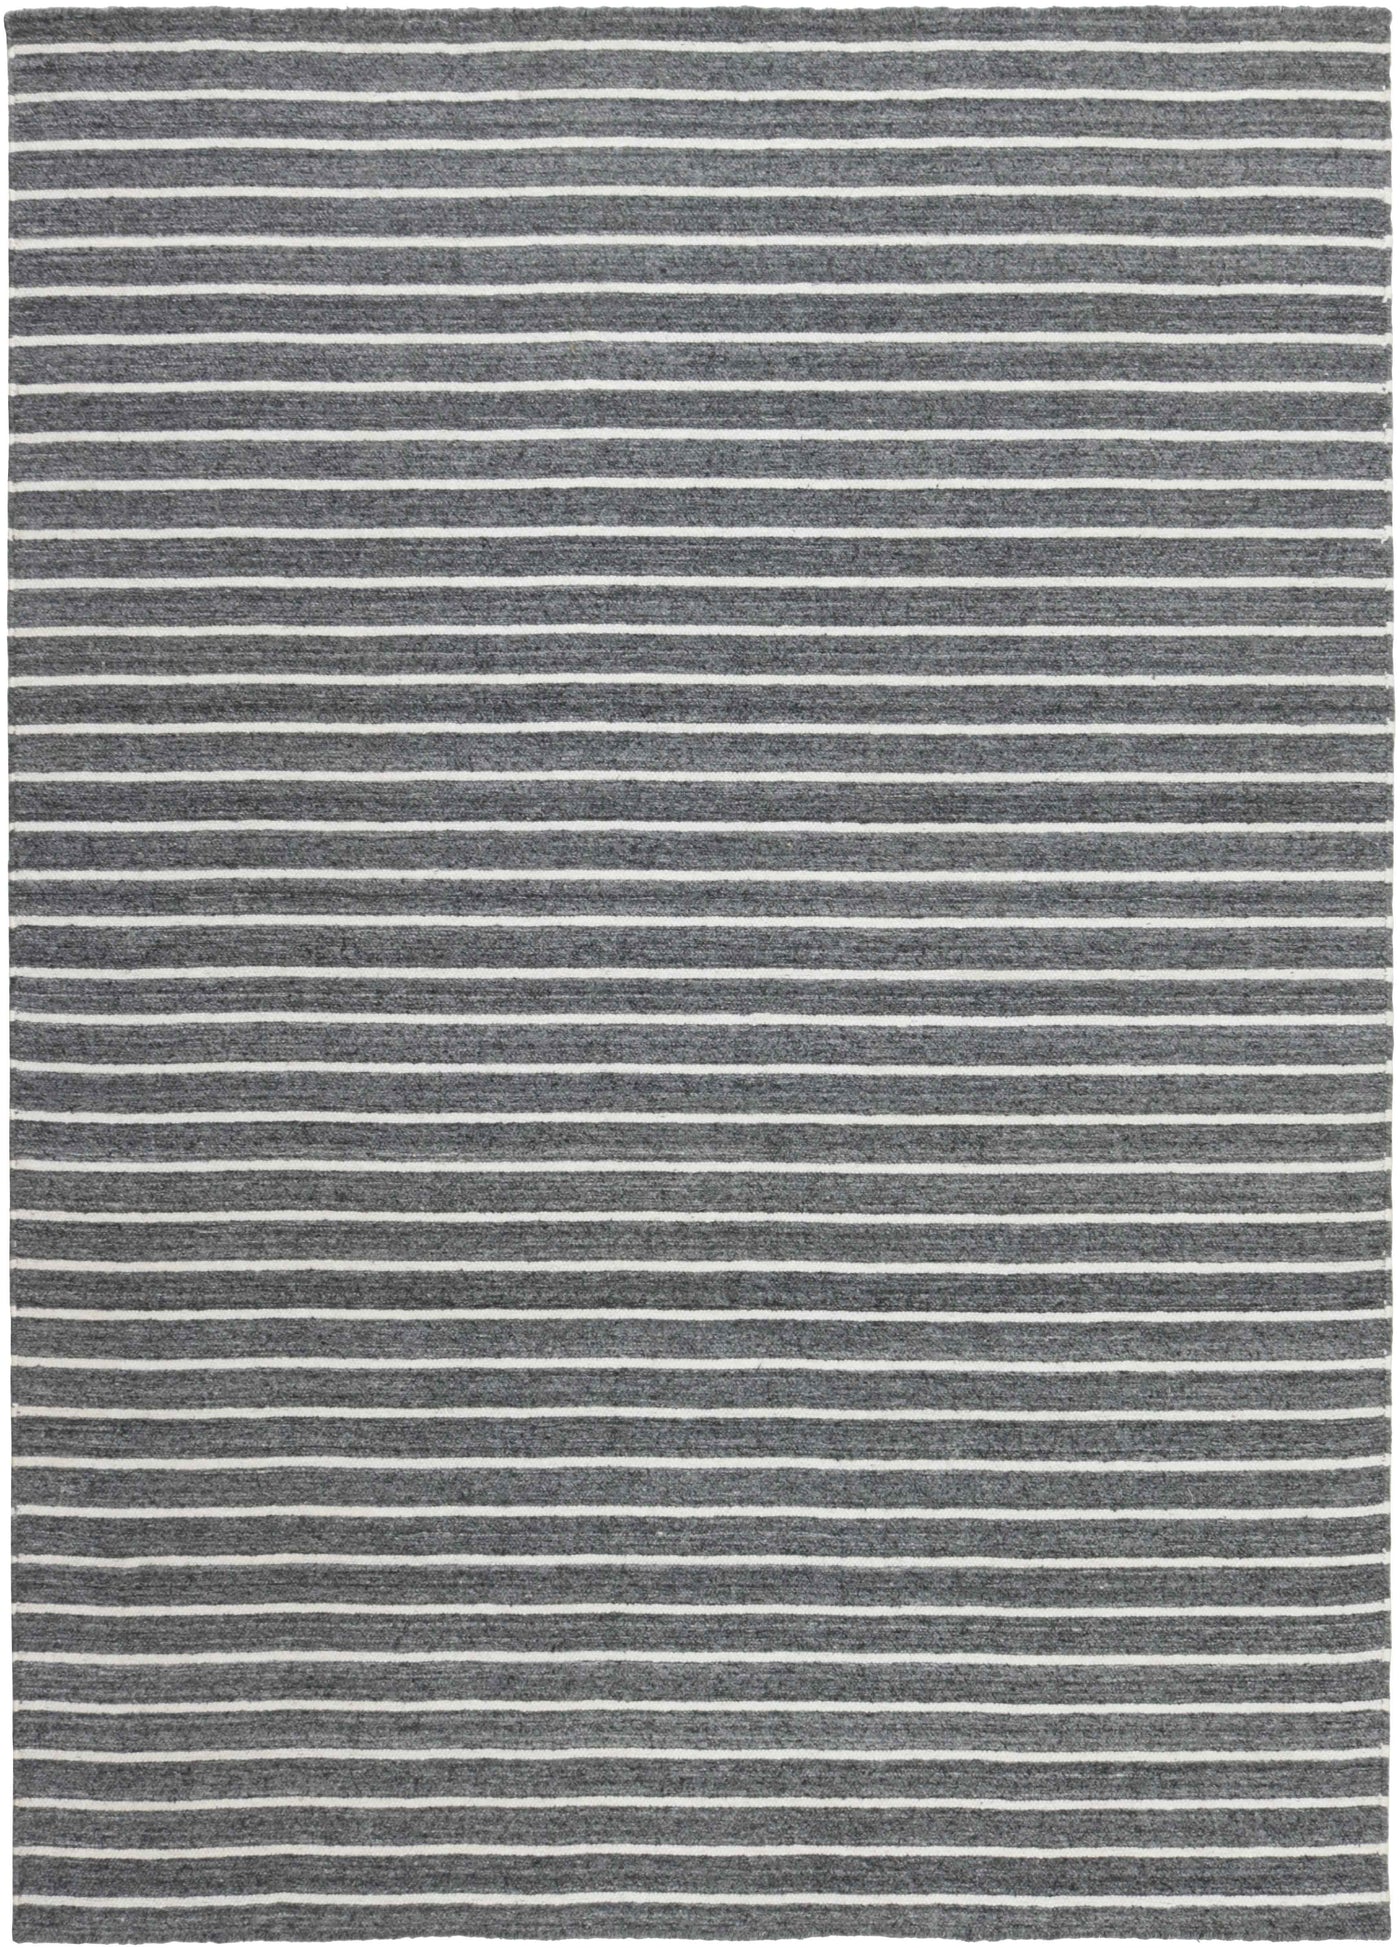 Nouveau Striped Teppich - Dark Grey White